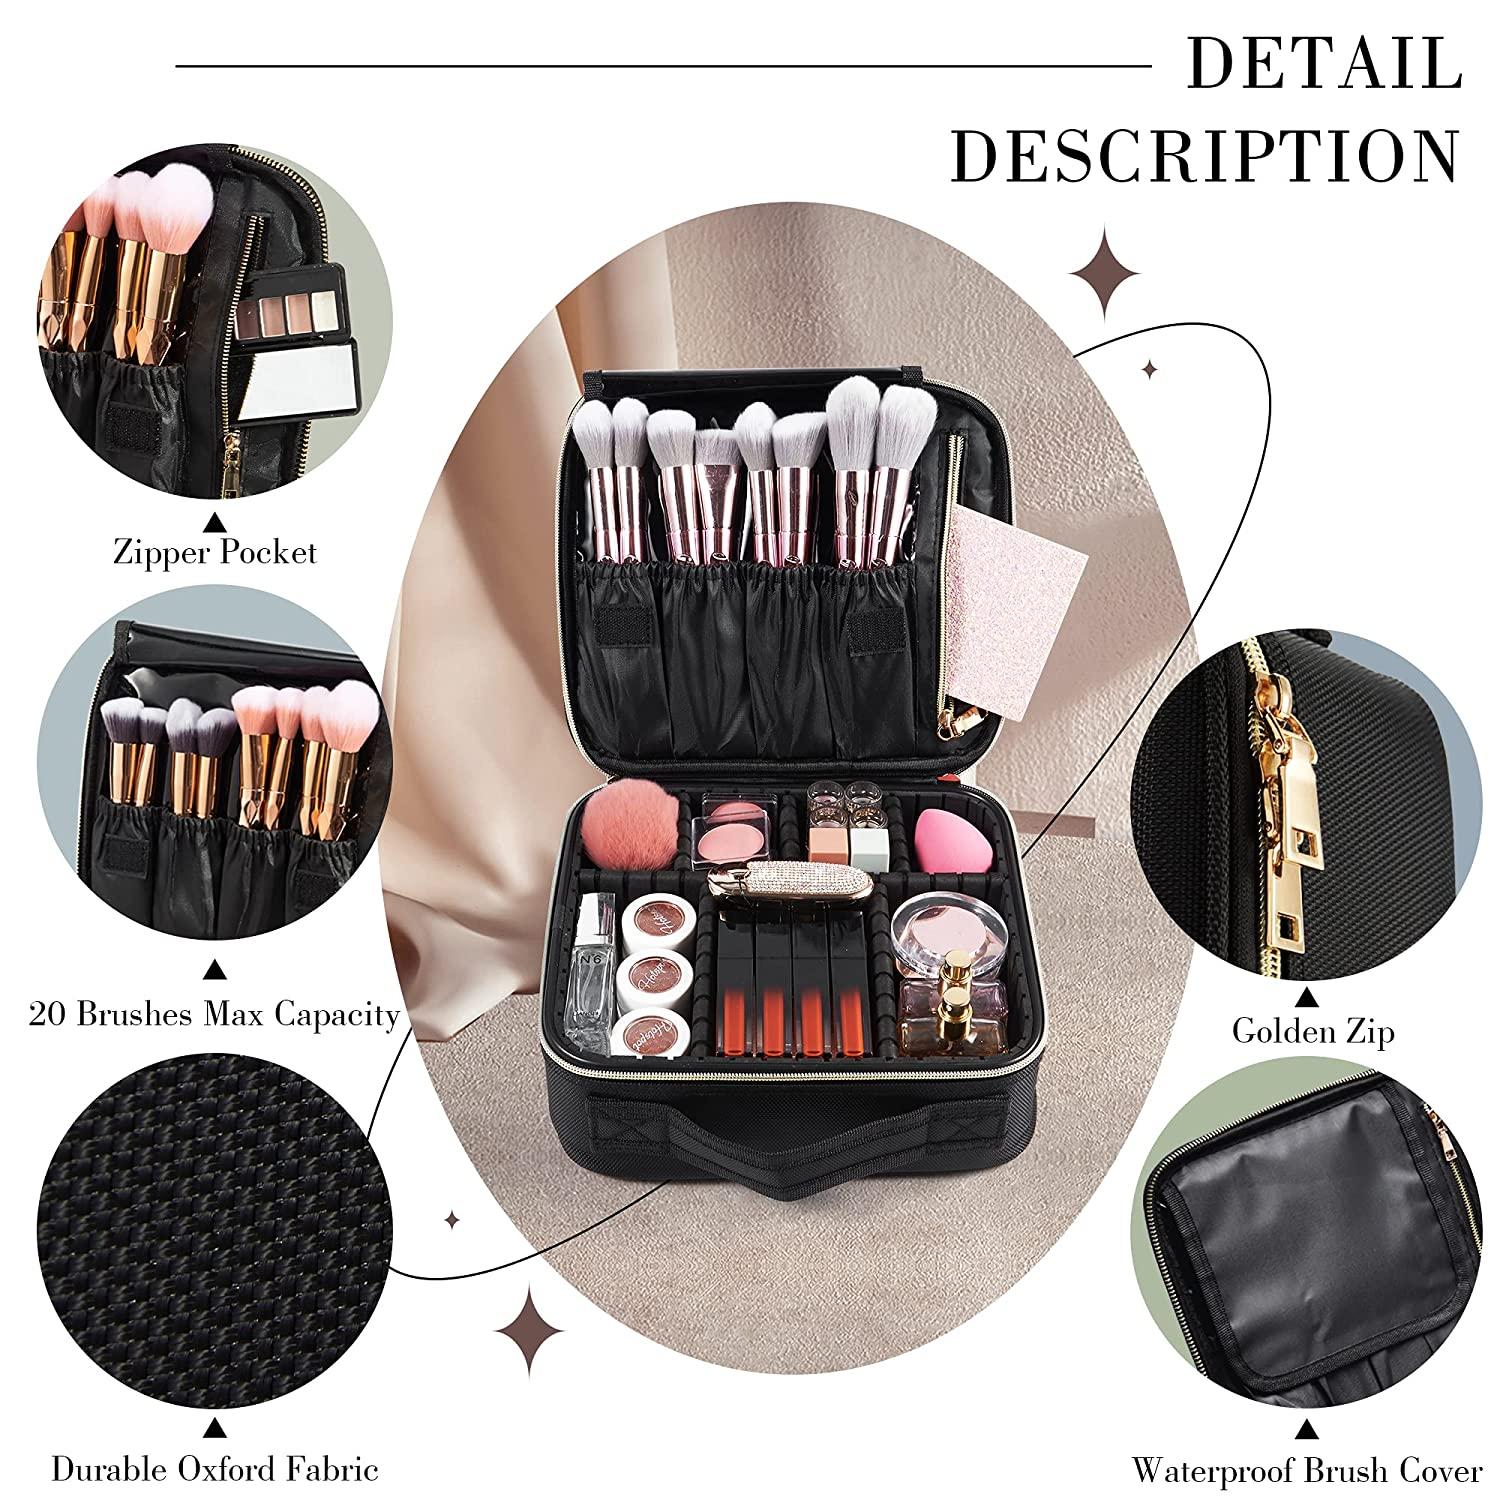 Professional Cosmetic Makeup Case Travel Wash Toiletry Bag Organizer Storage Box in Black